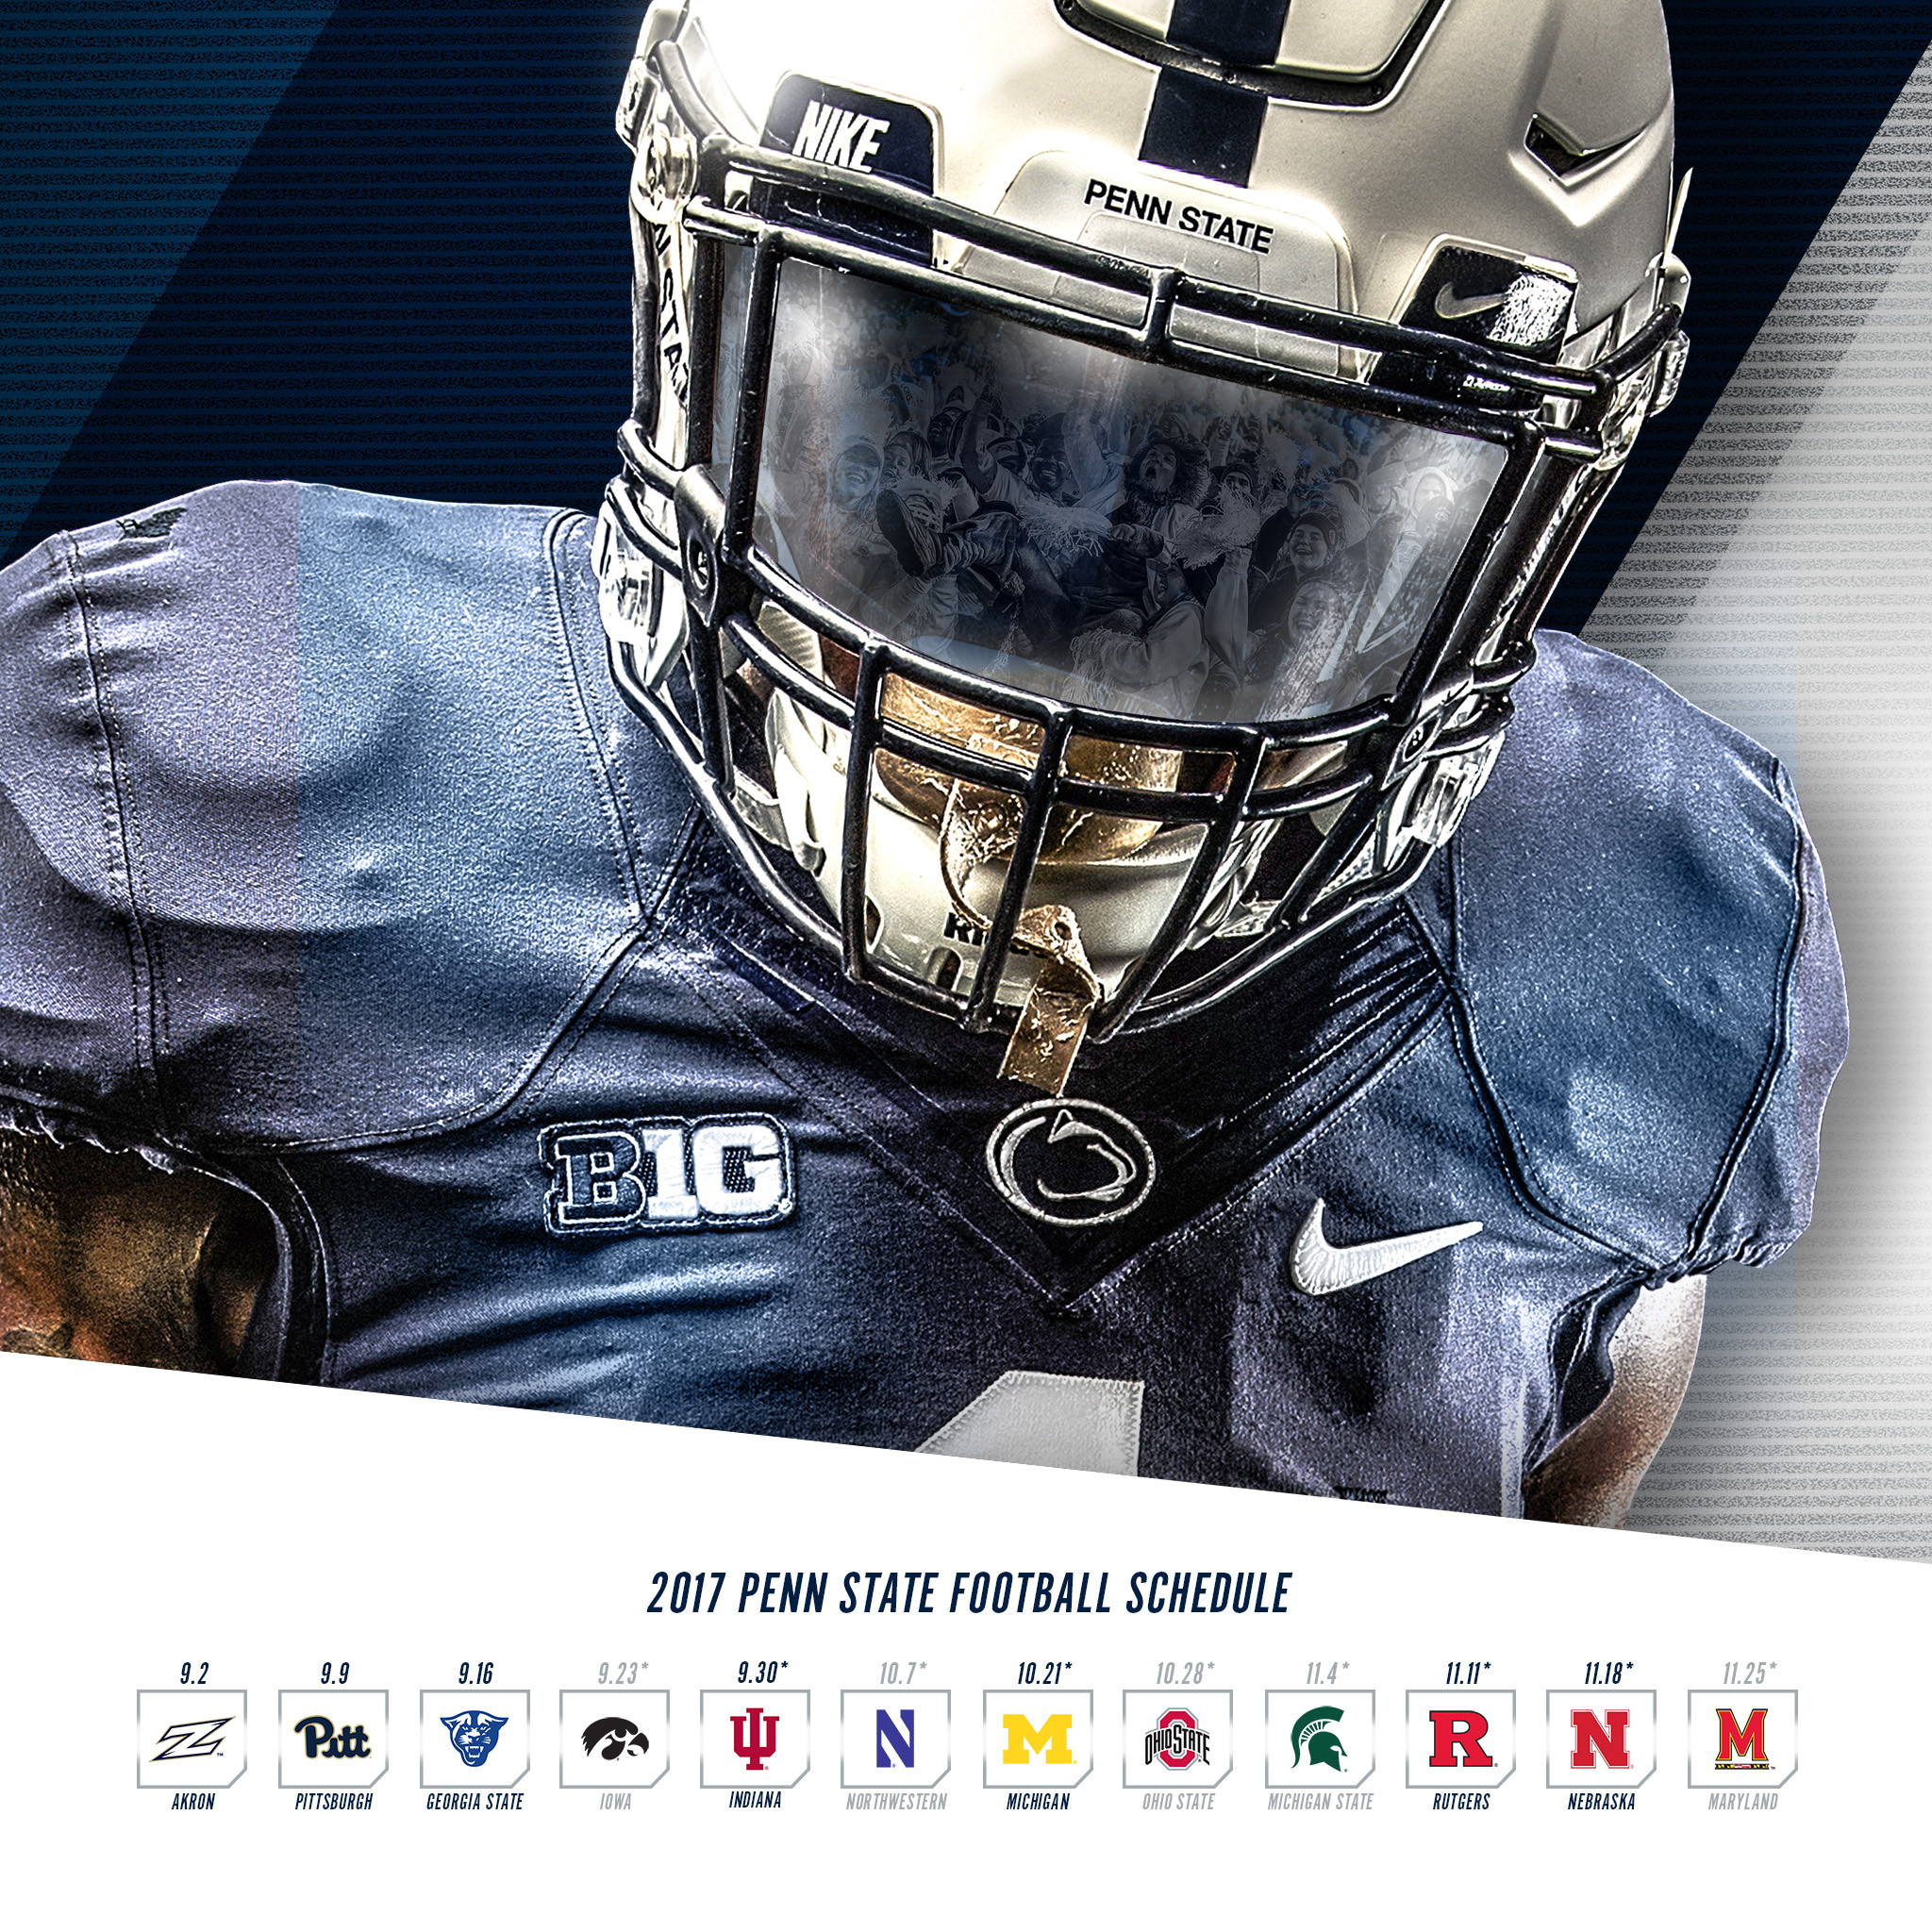 Penn State Football on Twitter Desktop Wallpaper   httpstcoVjpuaapt9t  Twitter